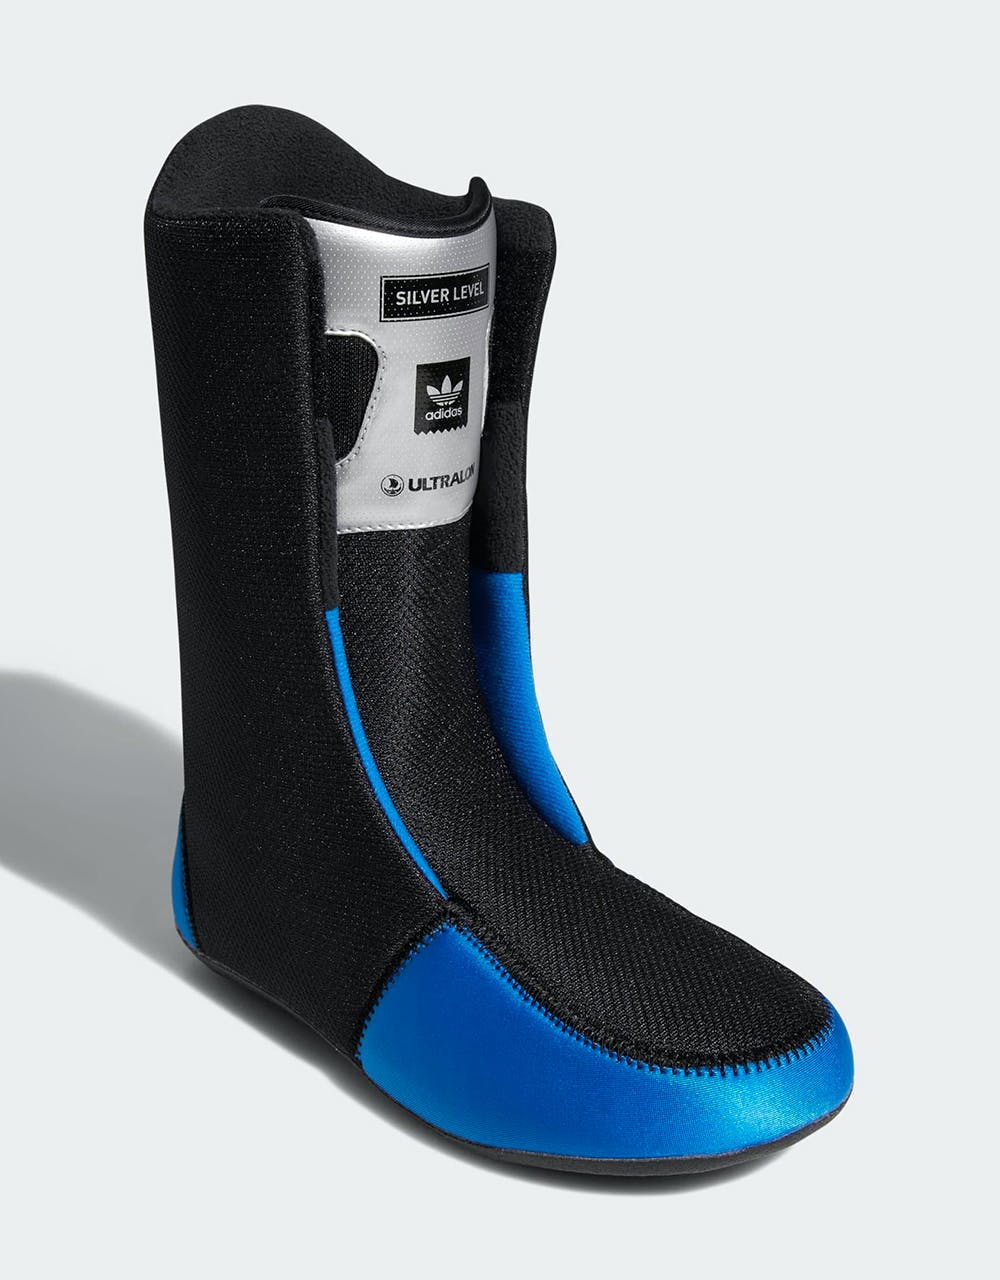 Adidas Tactical ADV Snowboard Boots - Core Black/Core Black/White